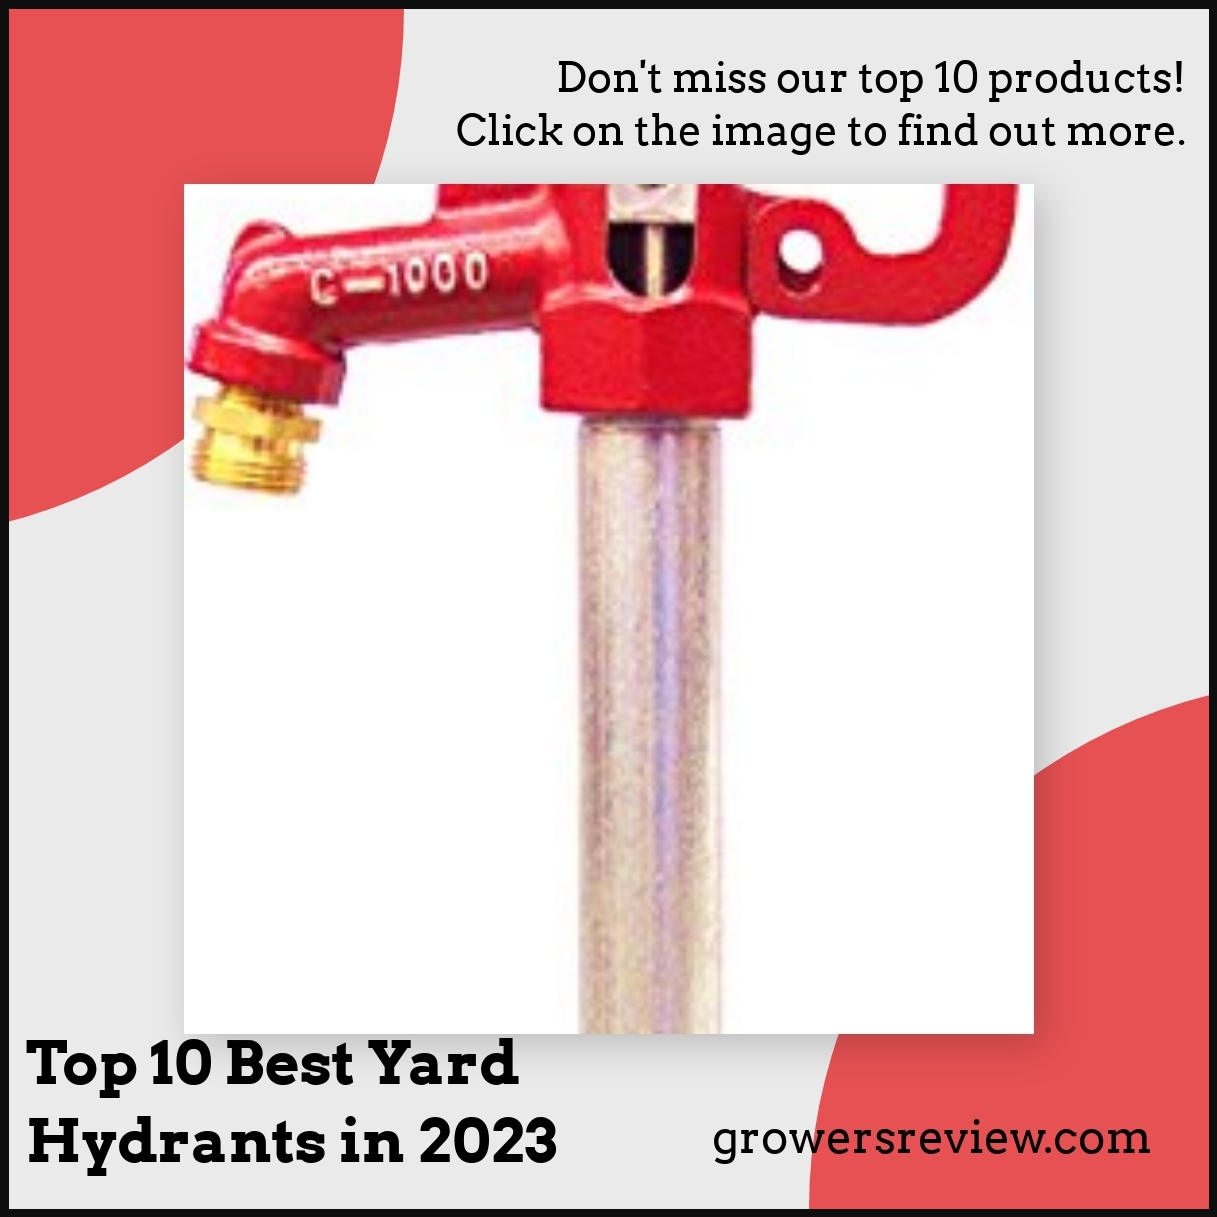 Top 10 Best Yard Hydrants in 2023